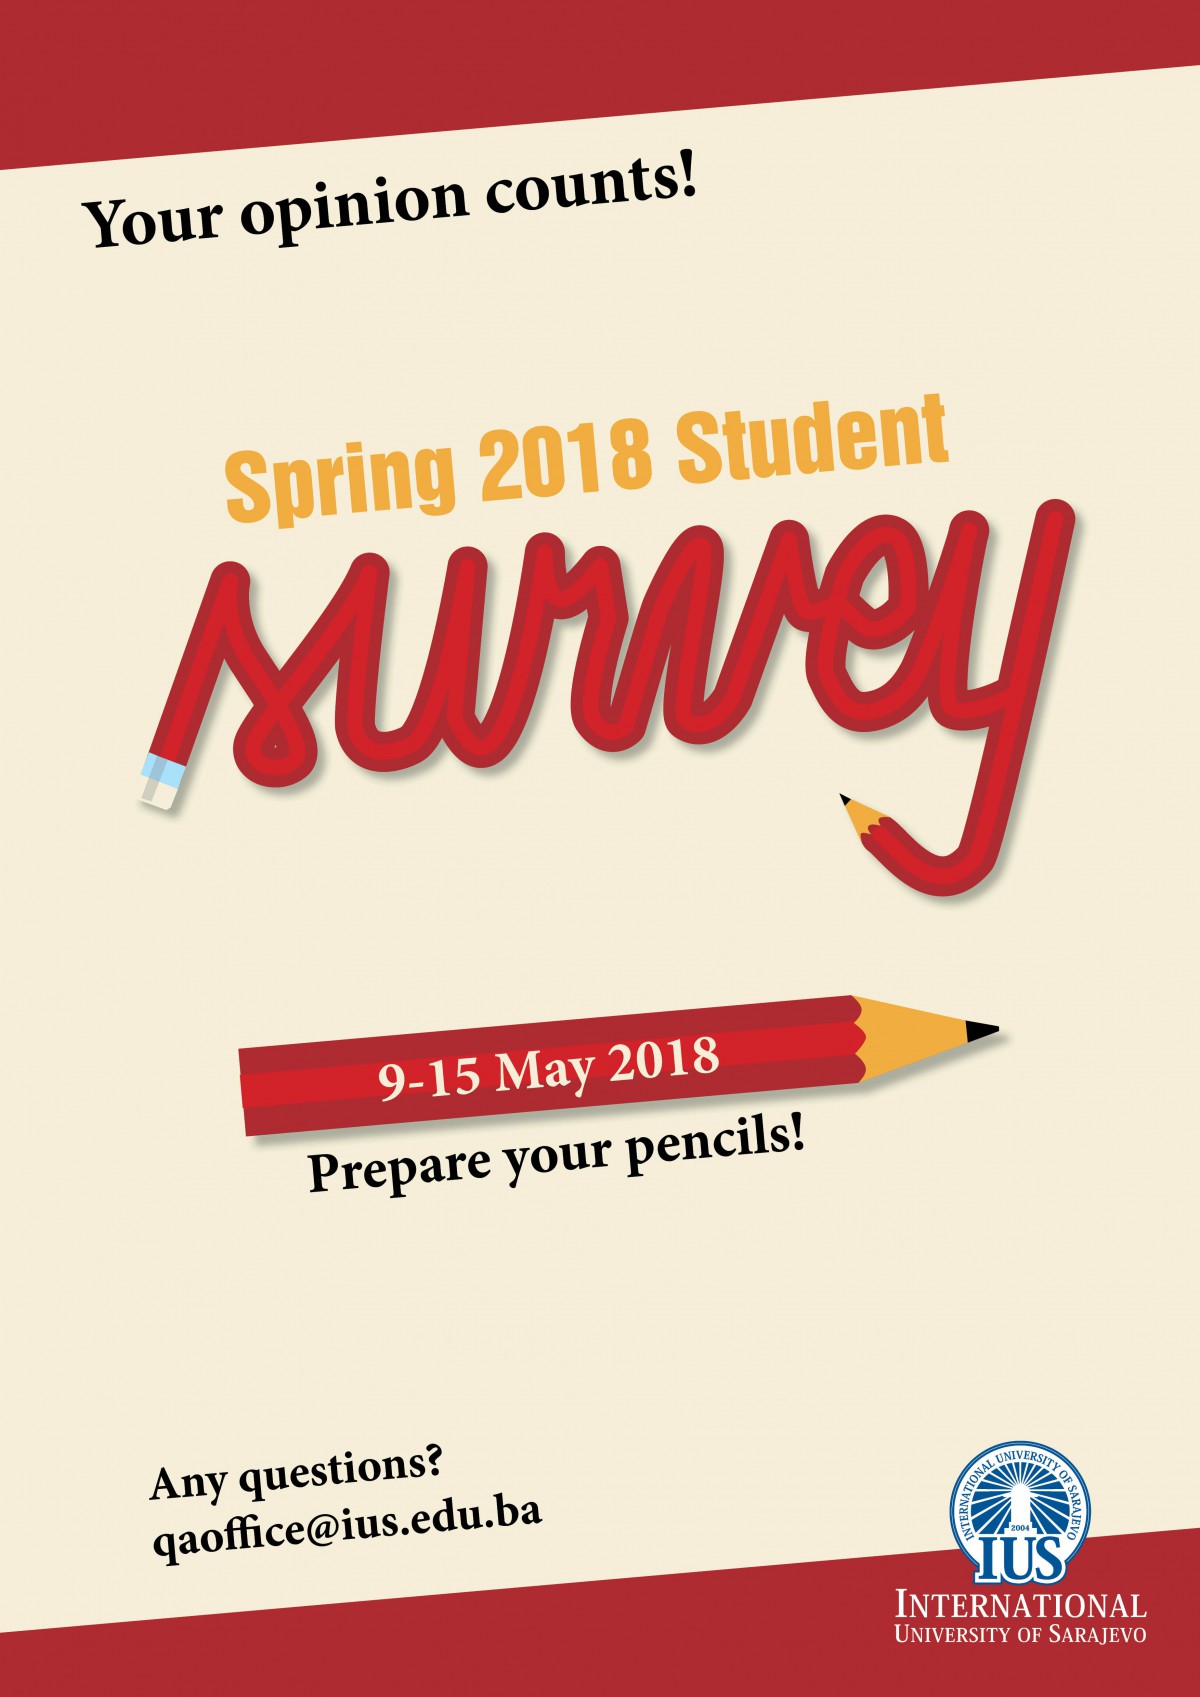  Spring 2018 Student survey 